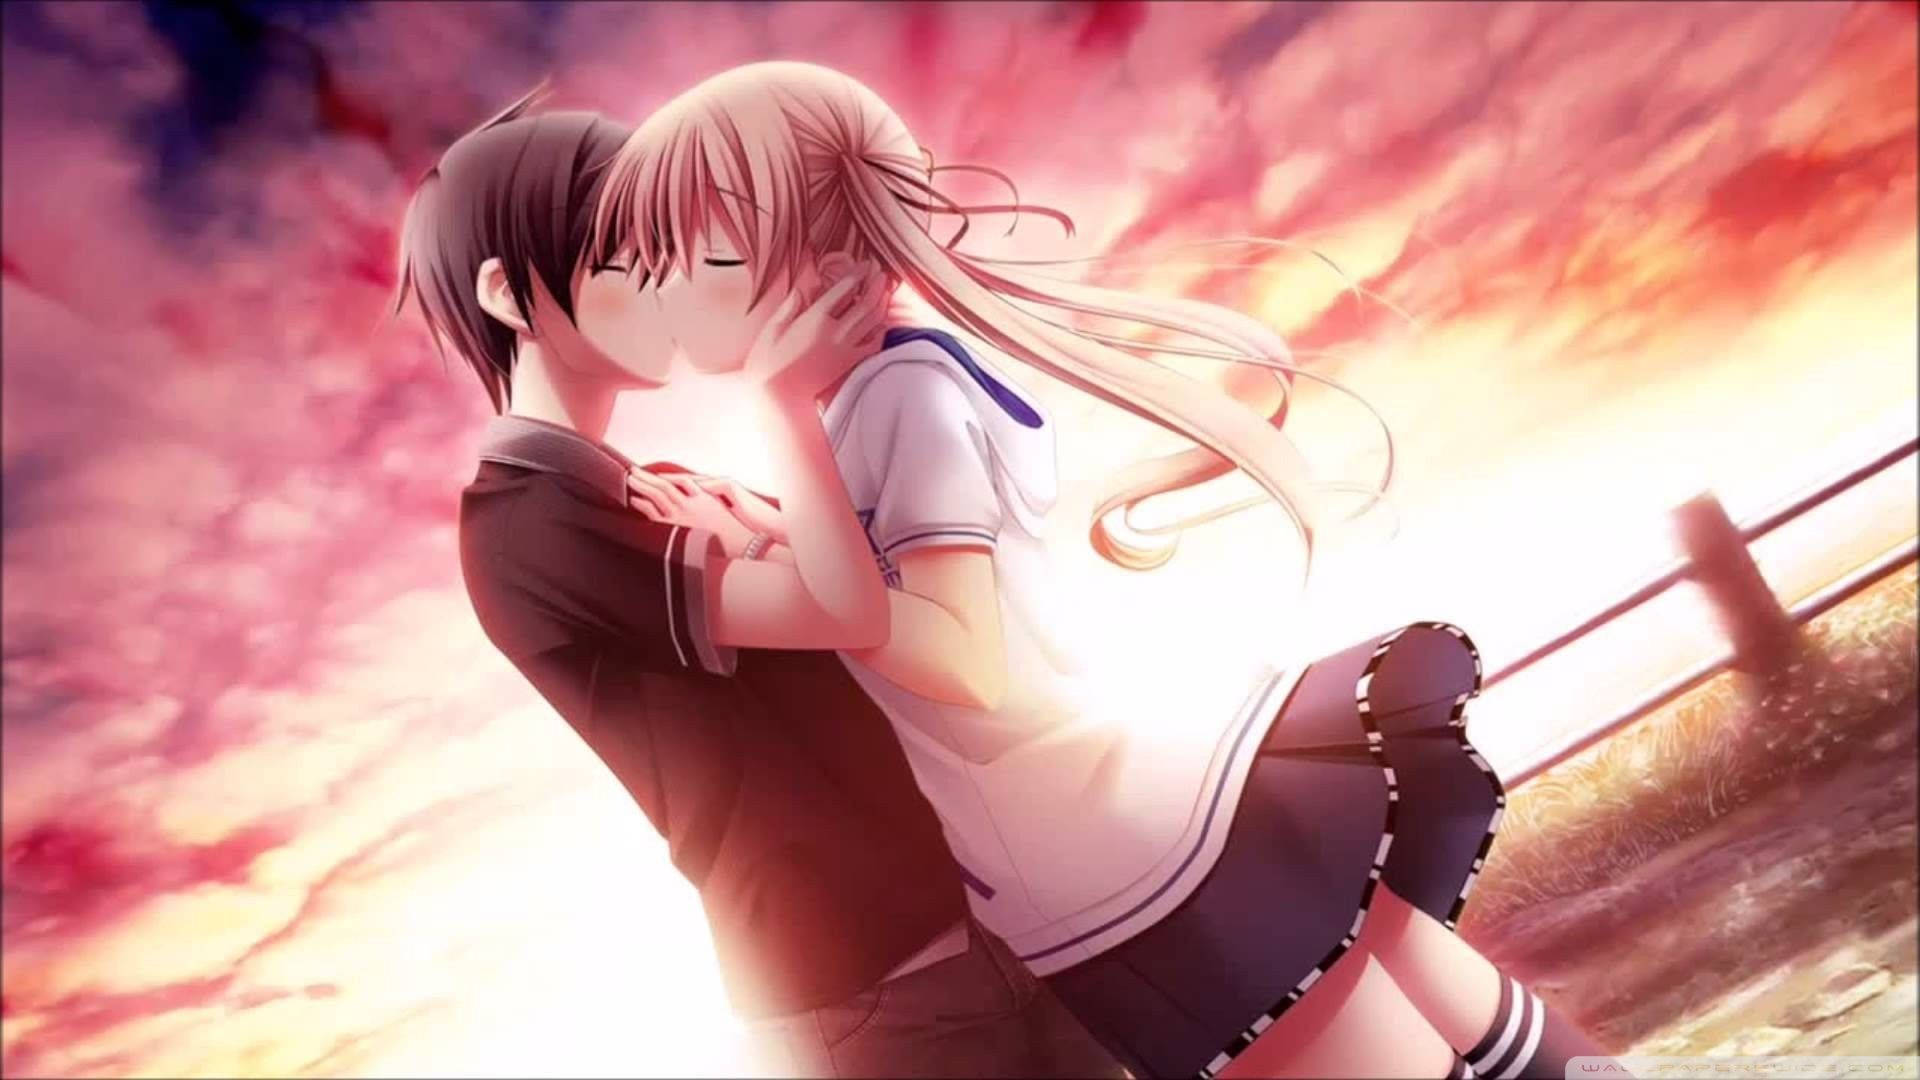 Top 10 High School Romance Anime  Articles on WatchMojocom